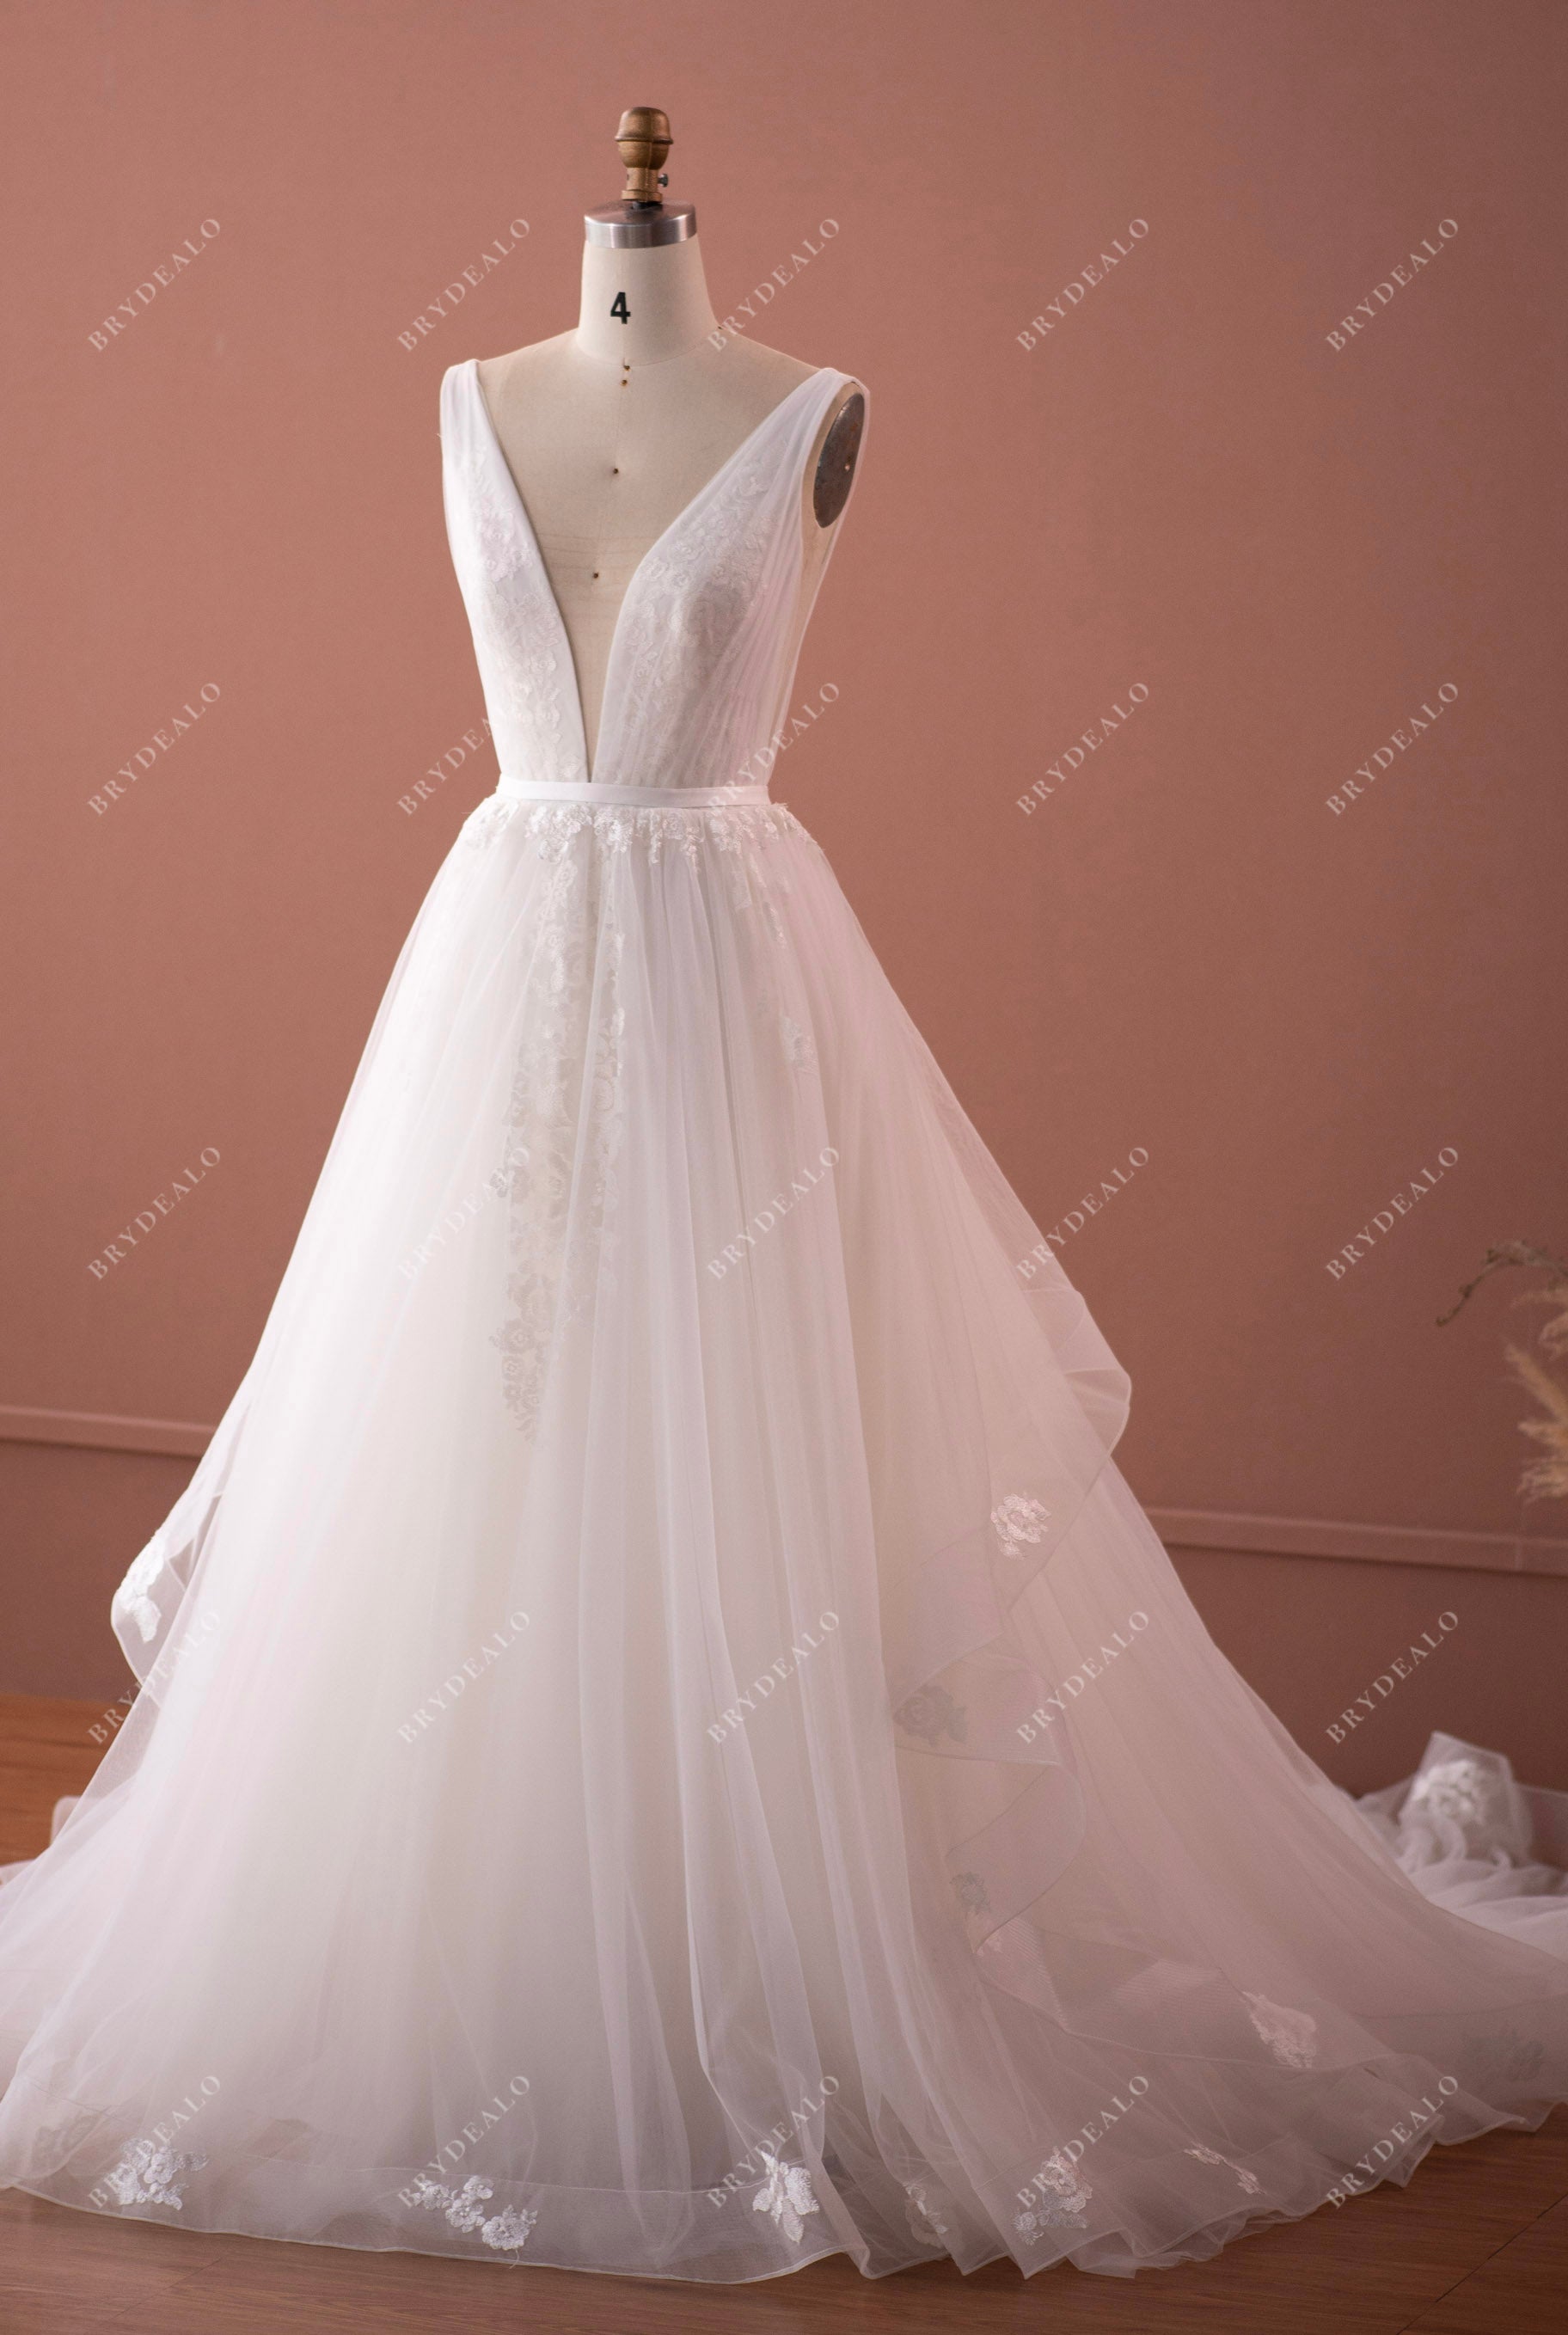 Floral Lace A-line Tulle Elegant Bridal Wedding Dress